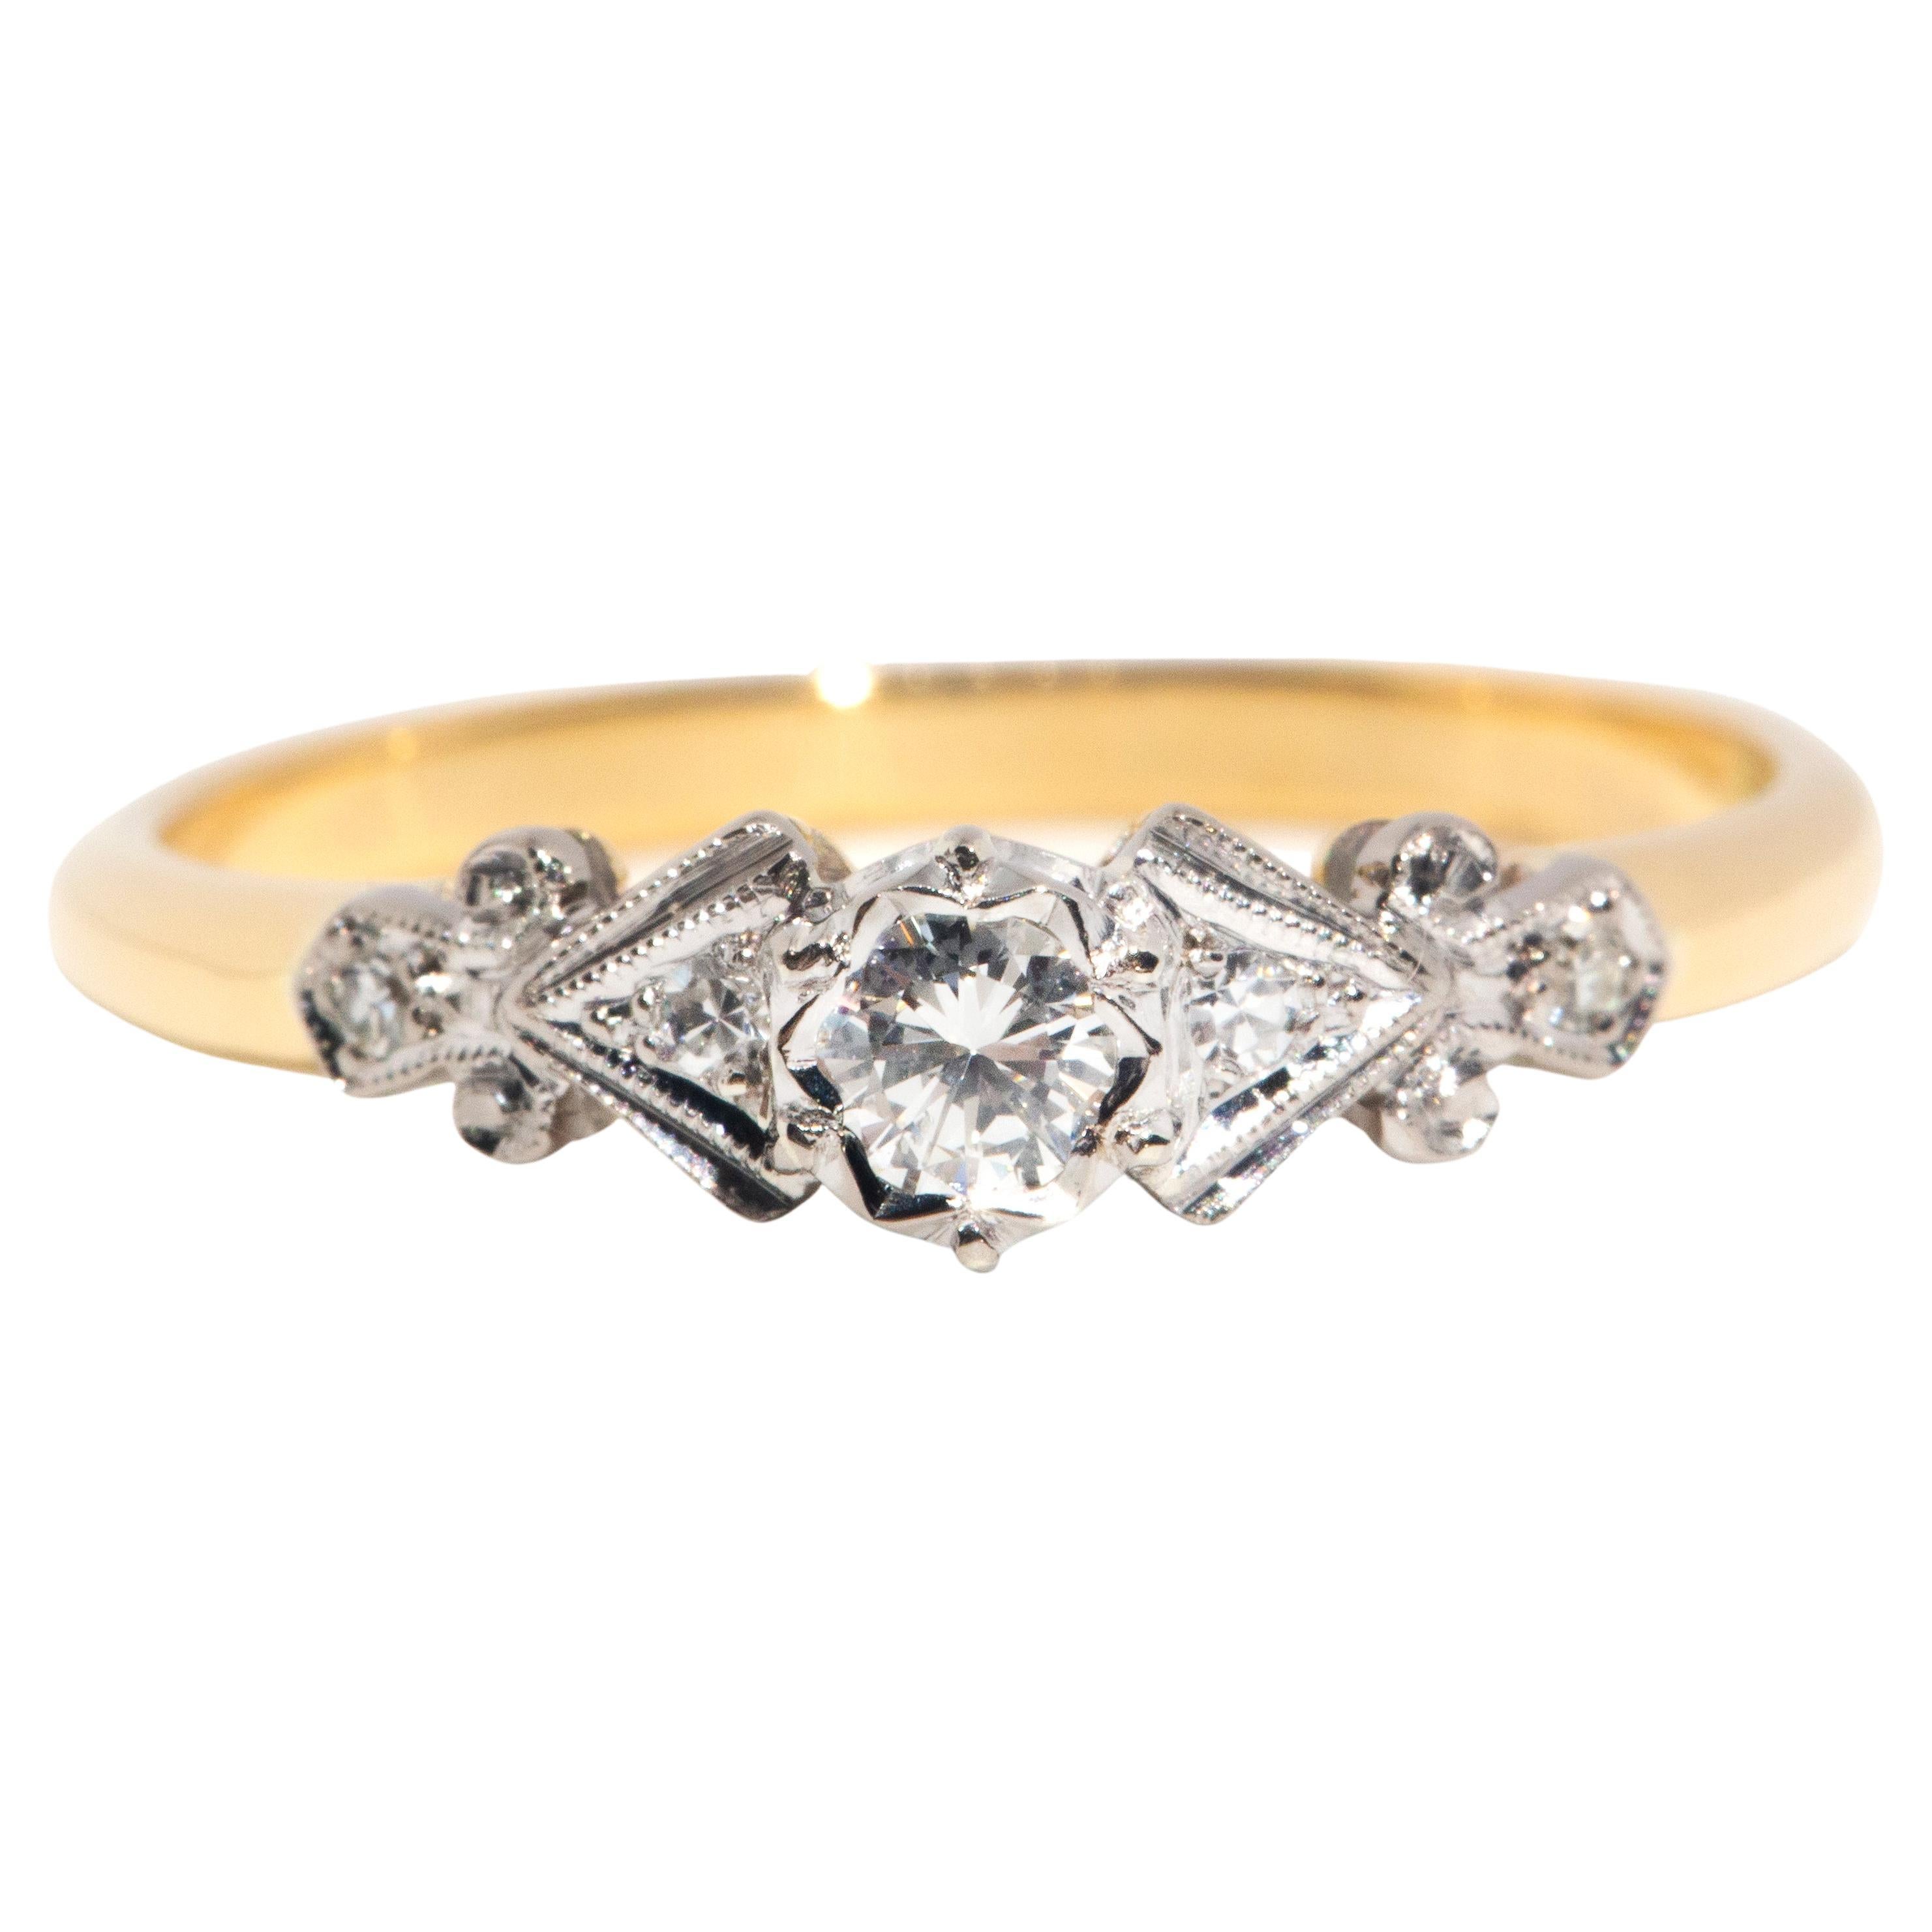 Vintage Circa 1930s 18 Carat Yellow and White Gold Diamond Art Deco Ring